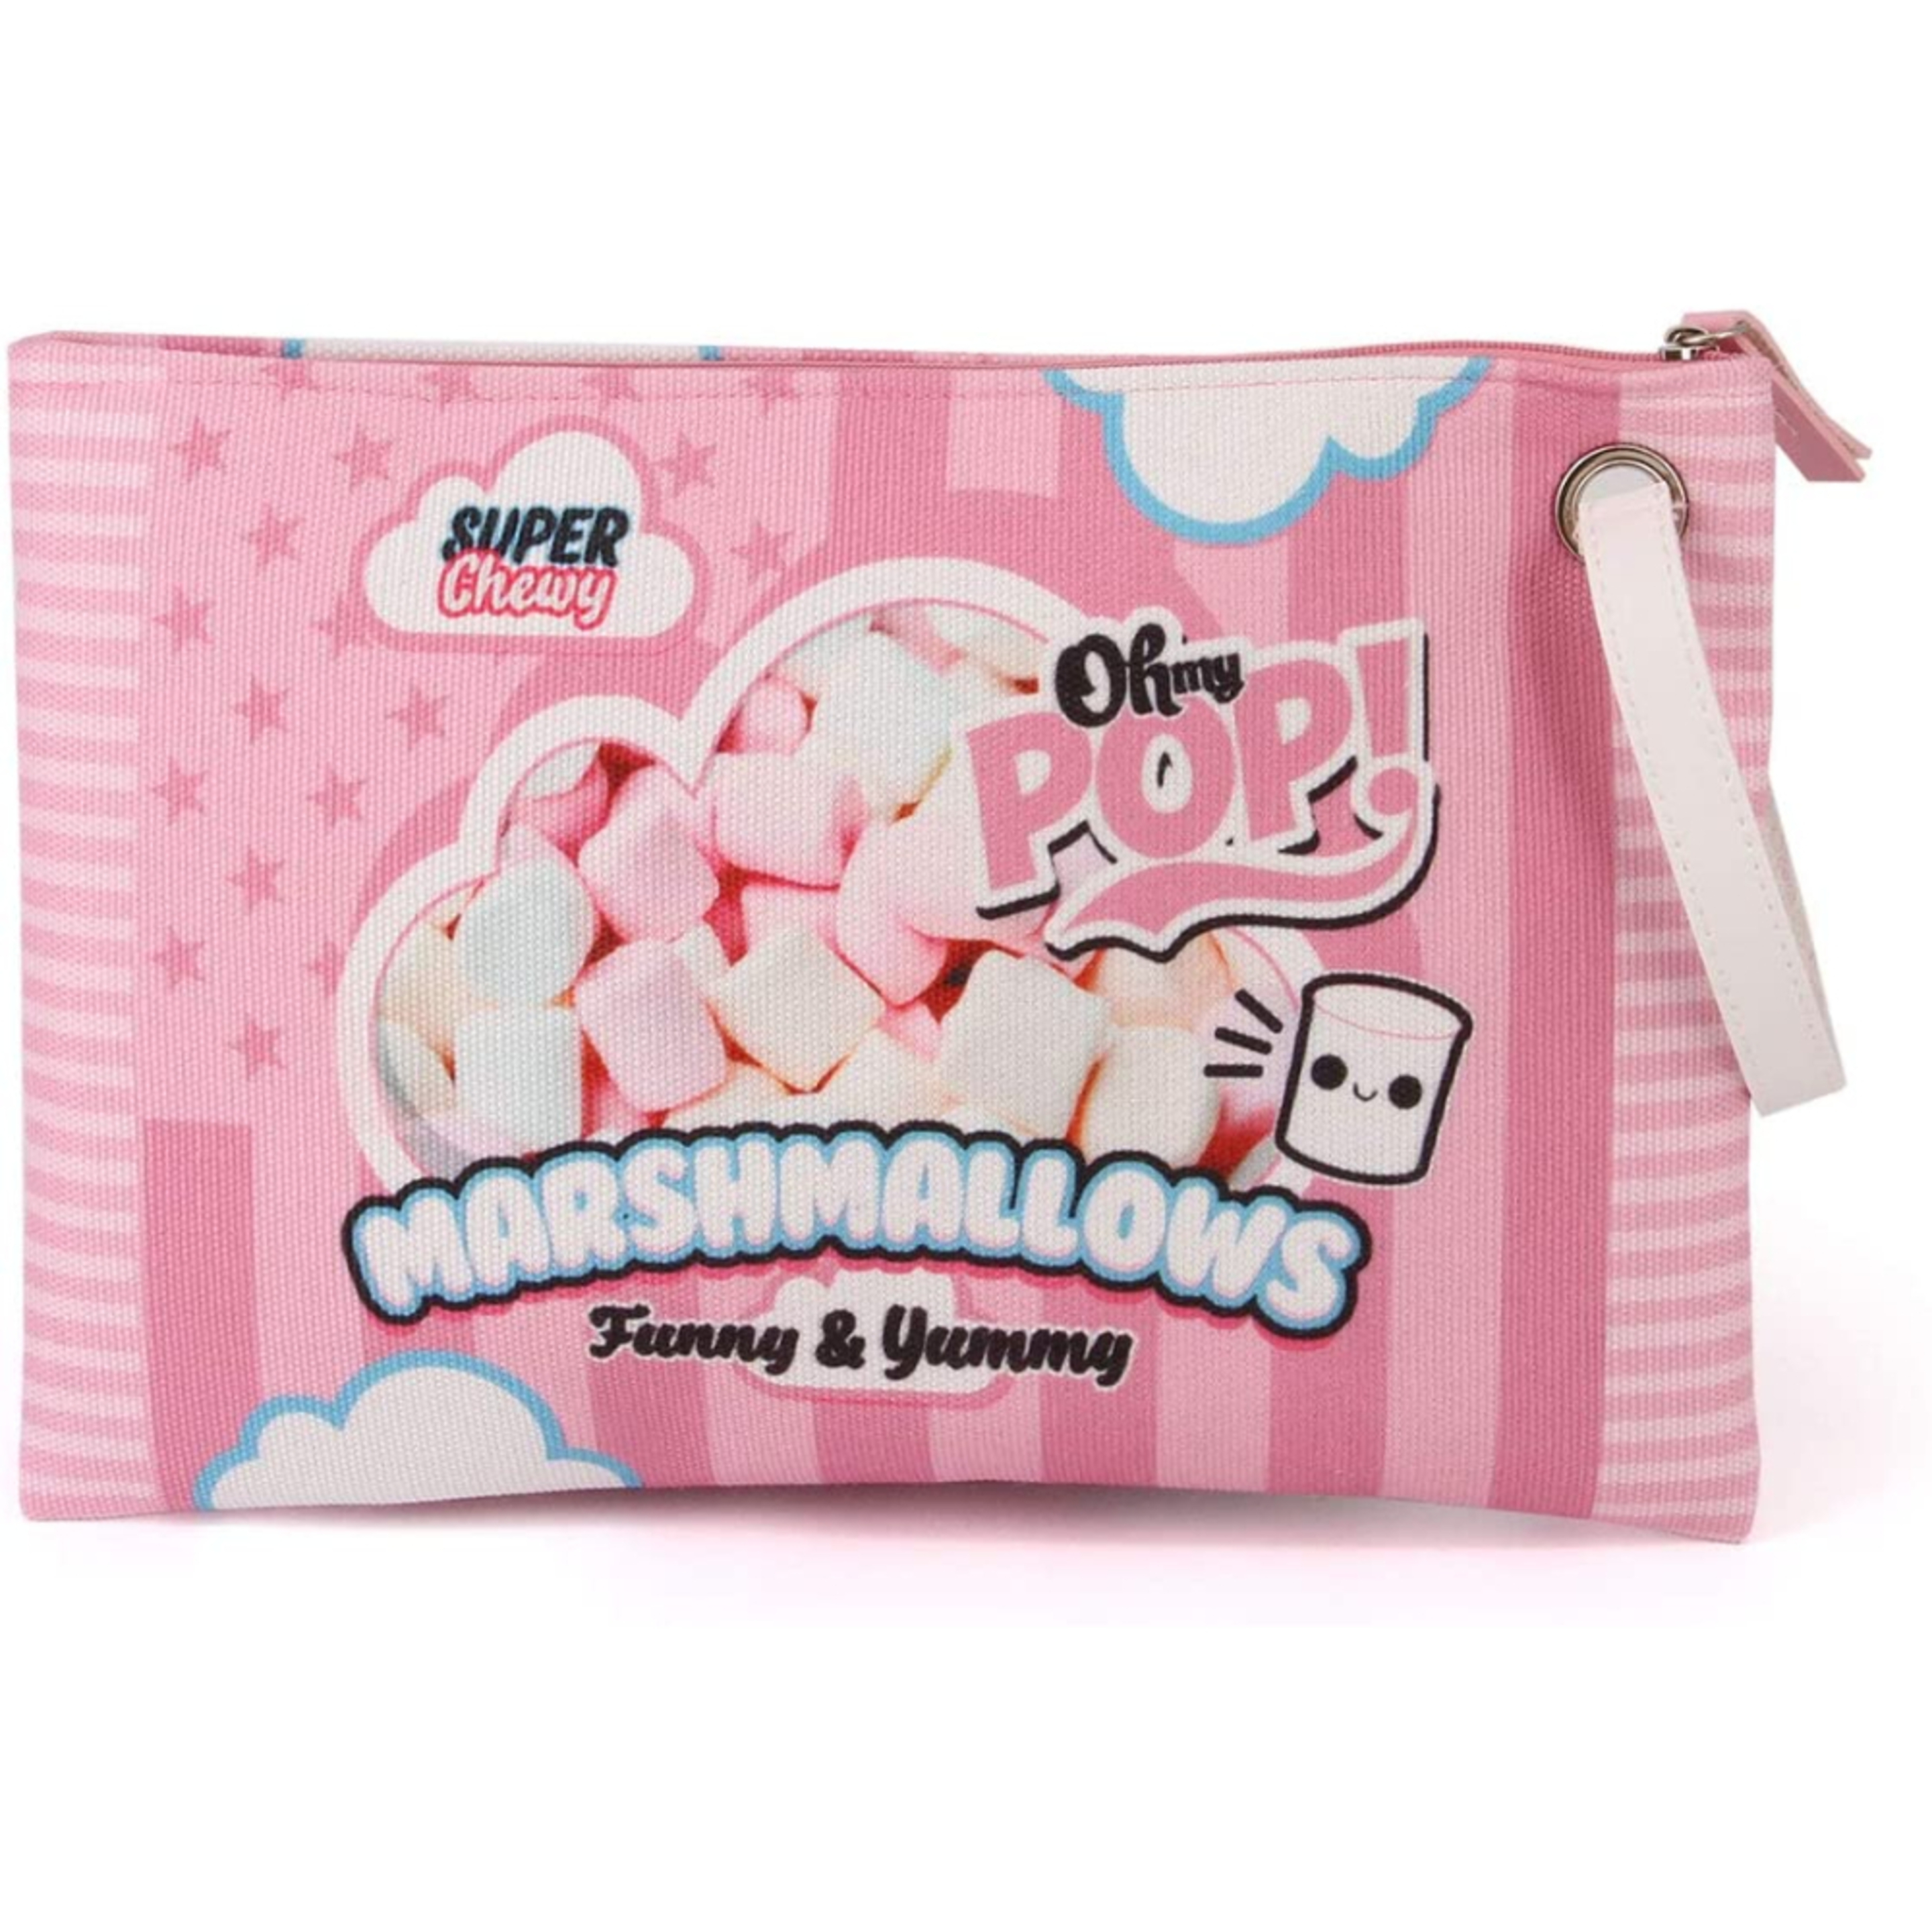 Neceser Oh My Pop Marshmallow